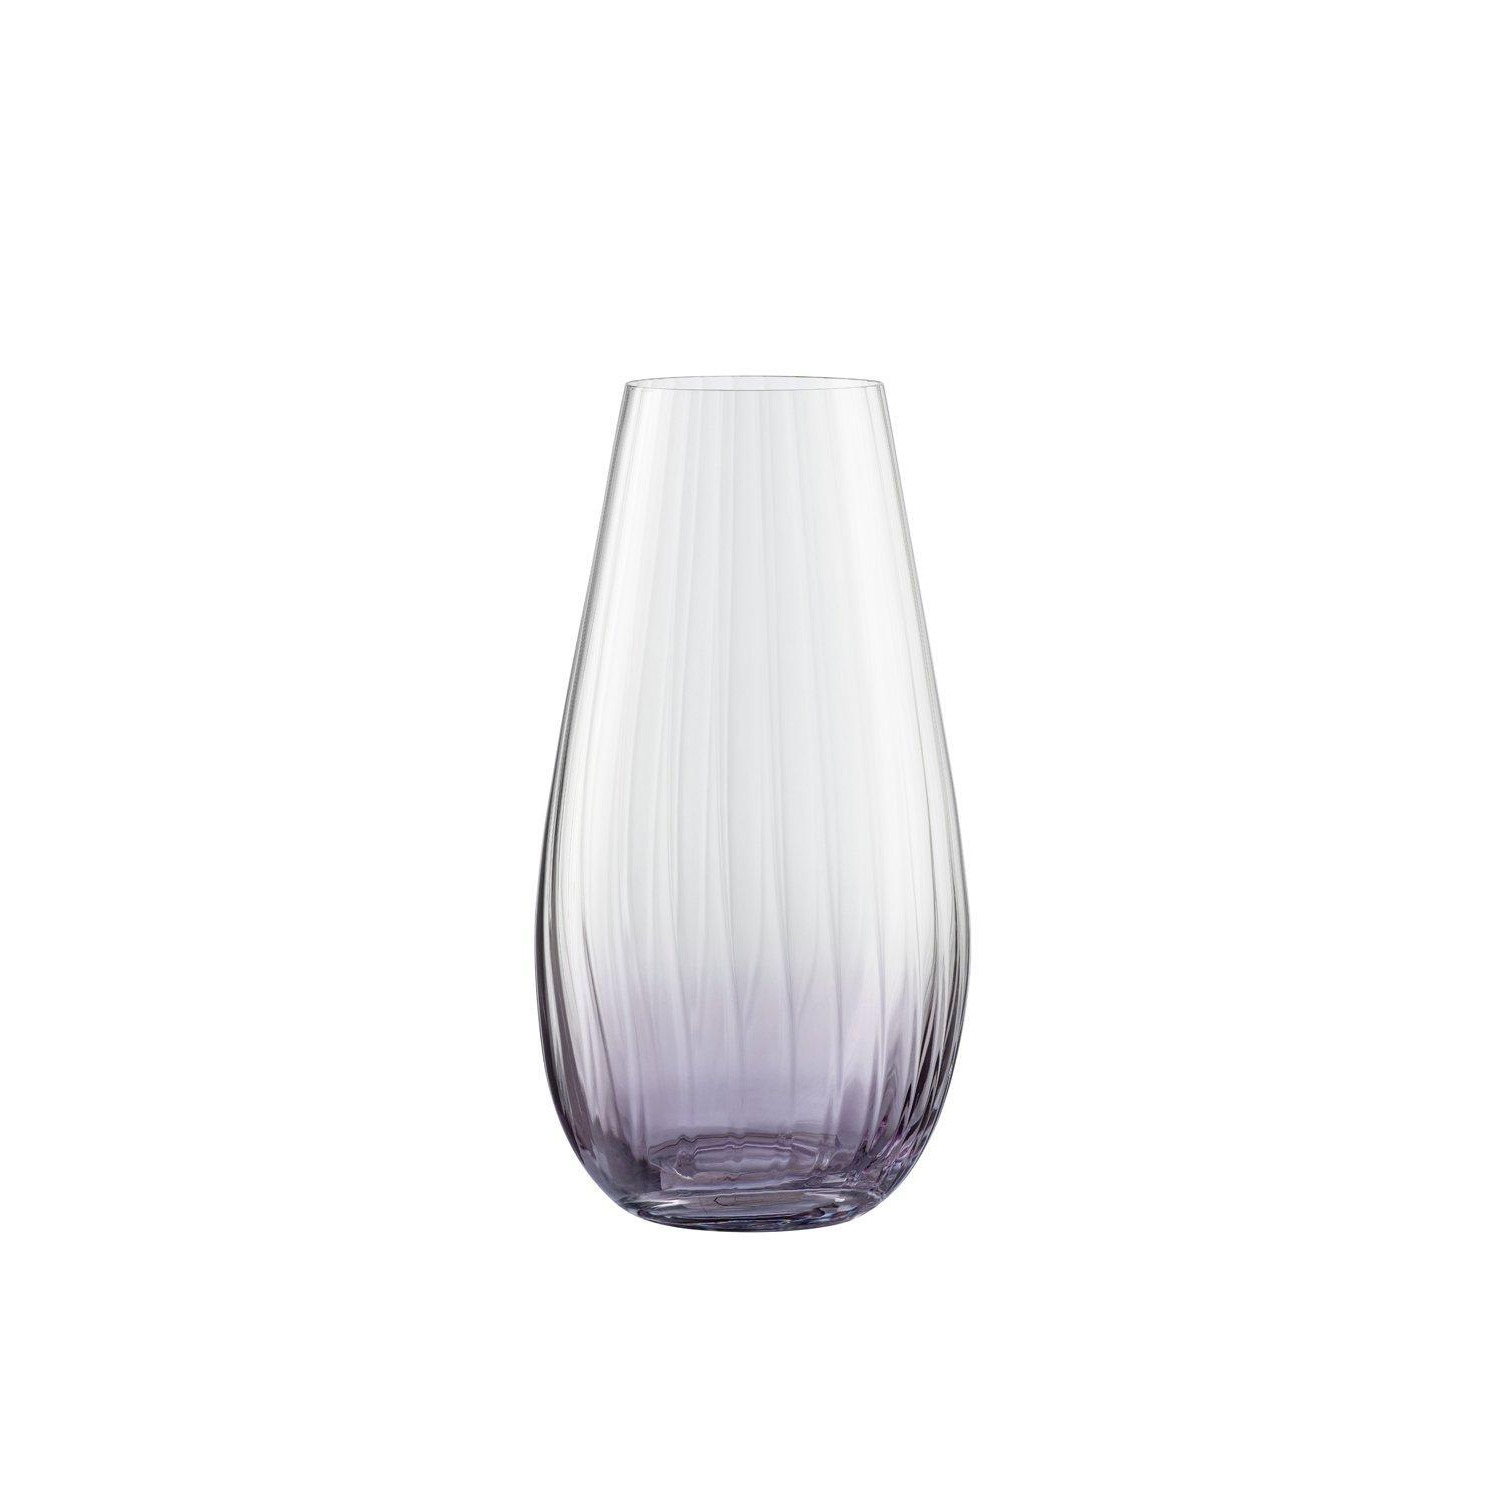 "'Erne' 9.5"" Vase - Colour Collection" - image 1